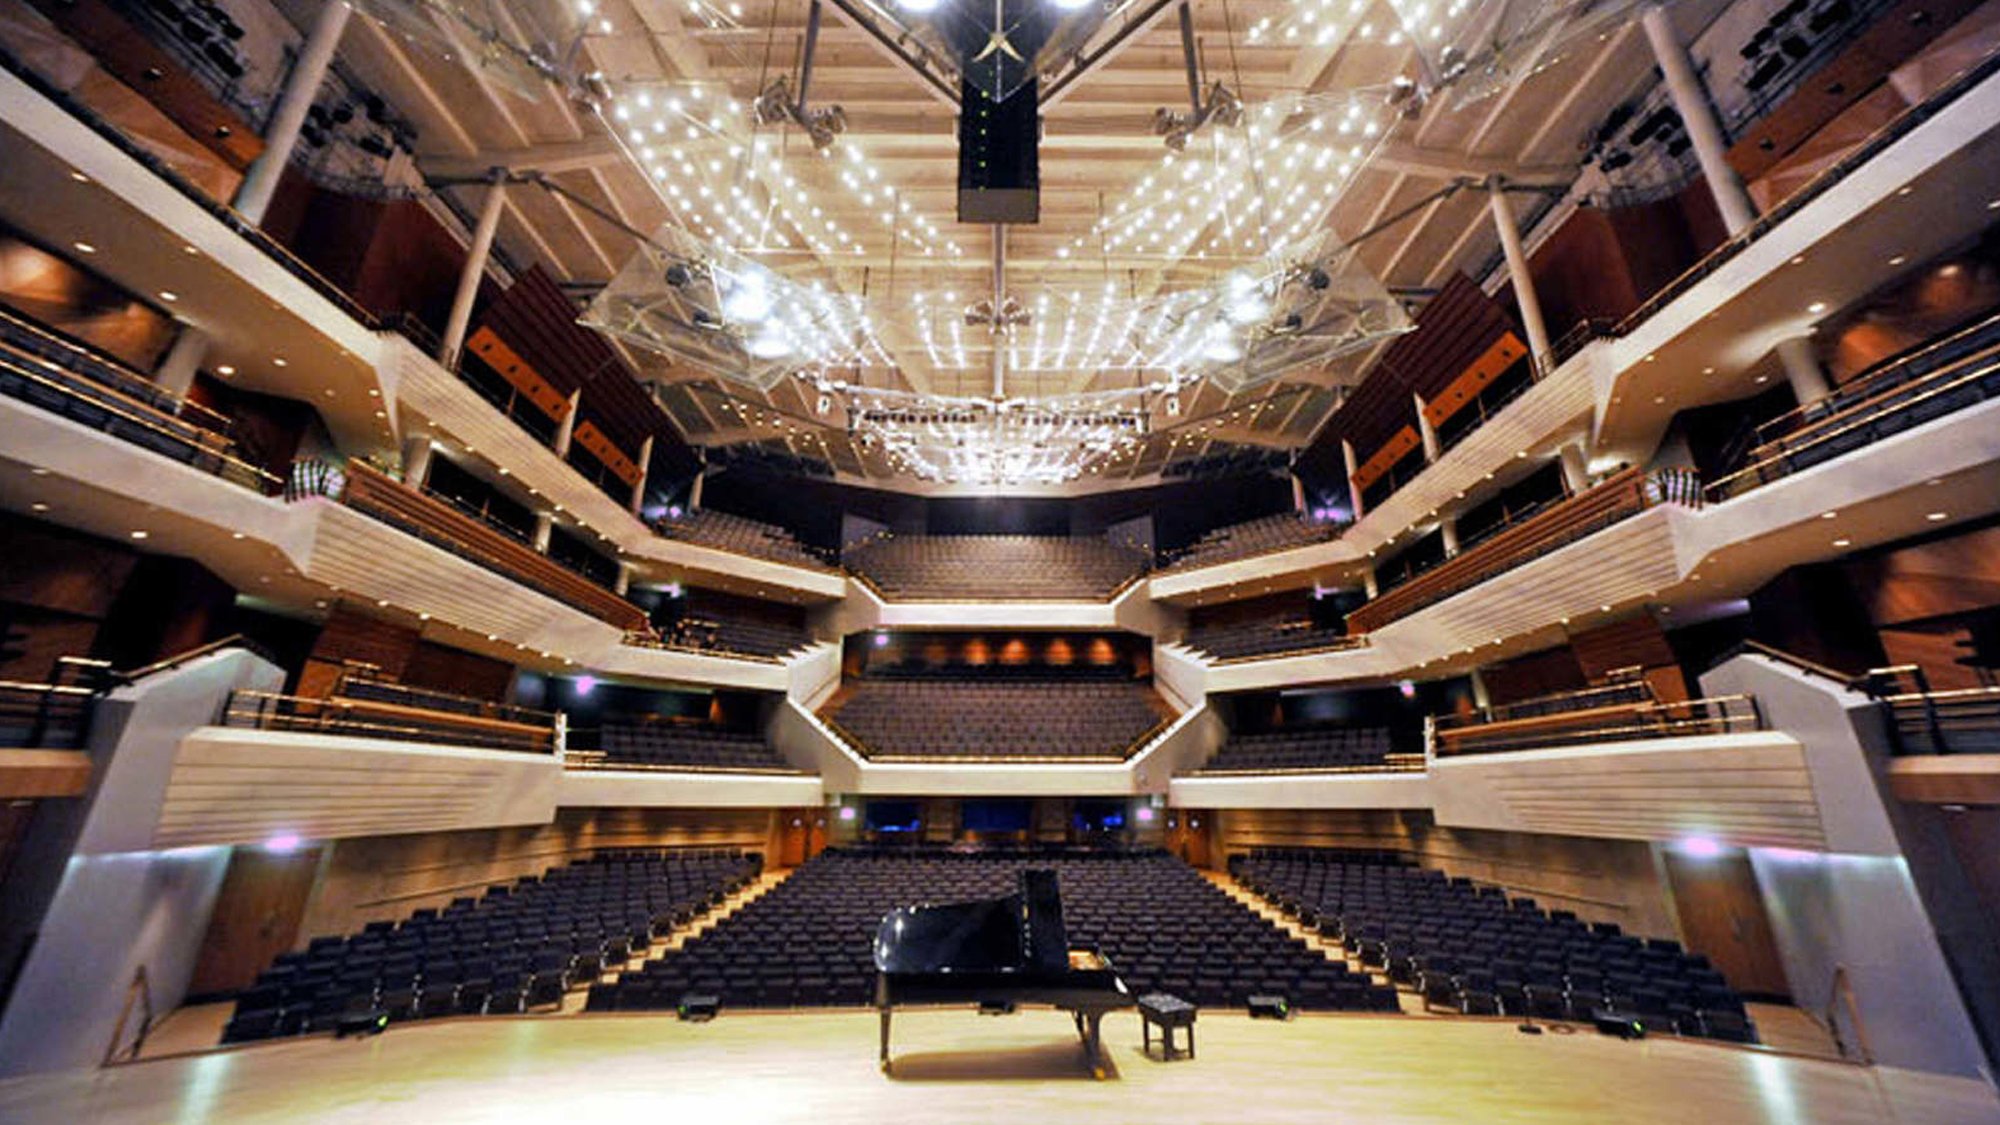 25 концертных залов. Концертный зал. Концертные залы. Вид со сцены театра. Красивый концертный зал.